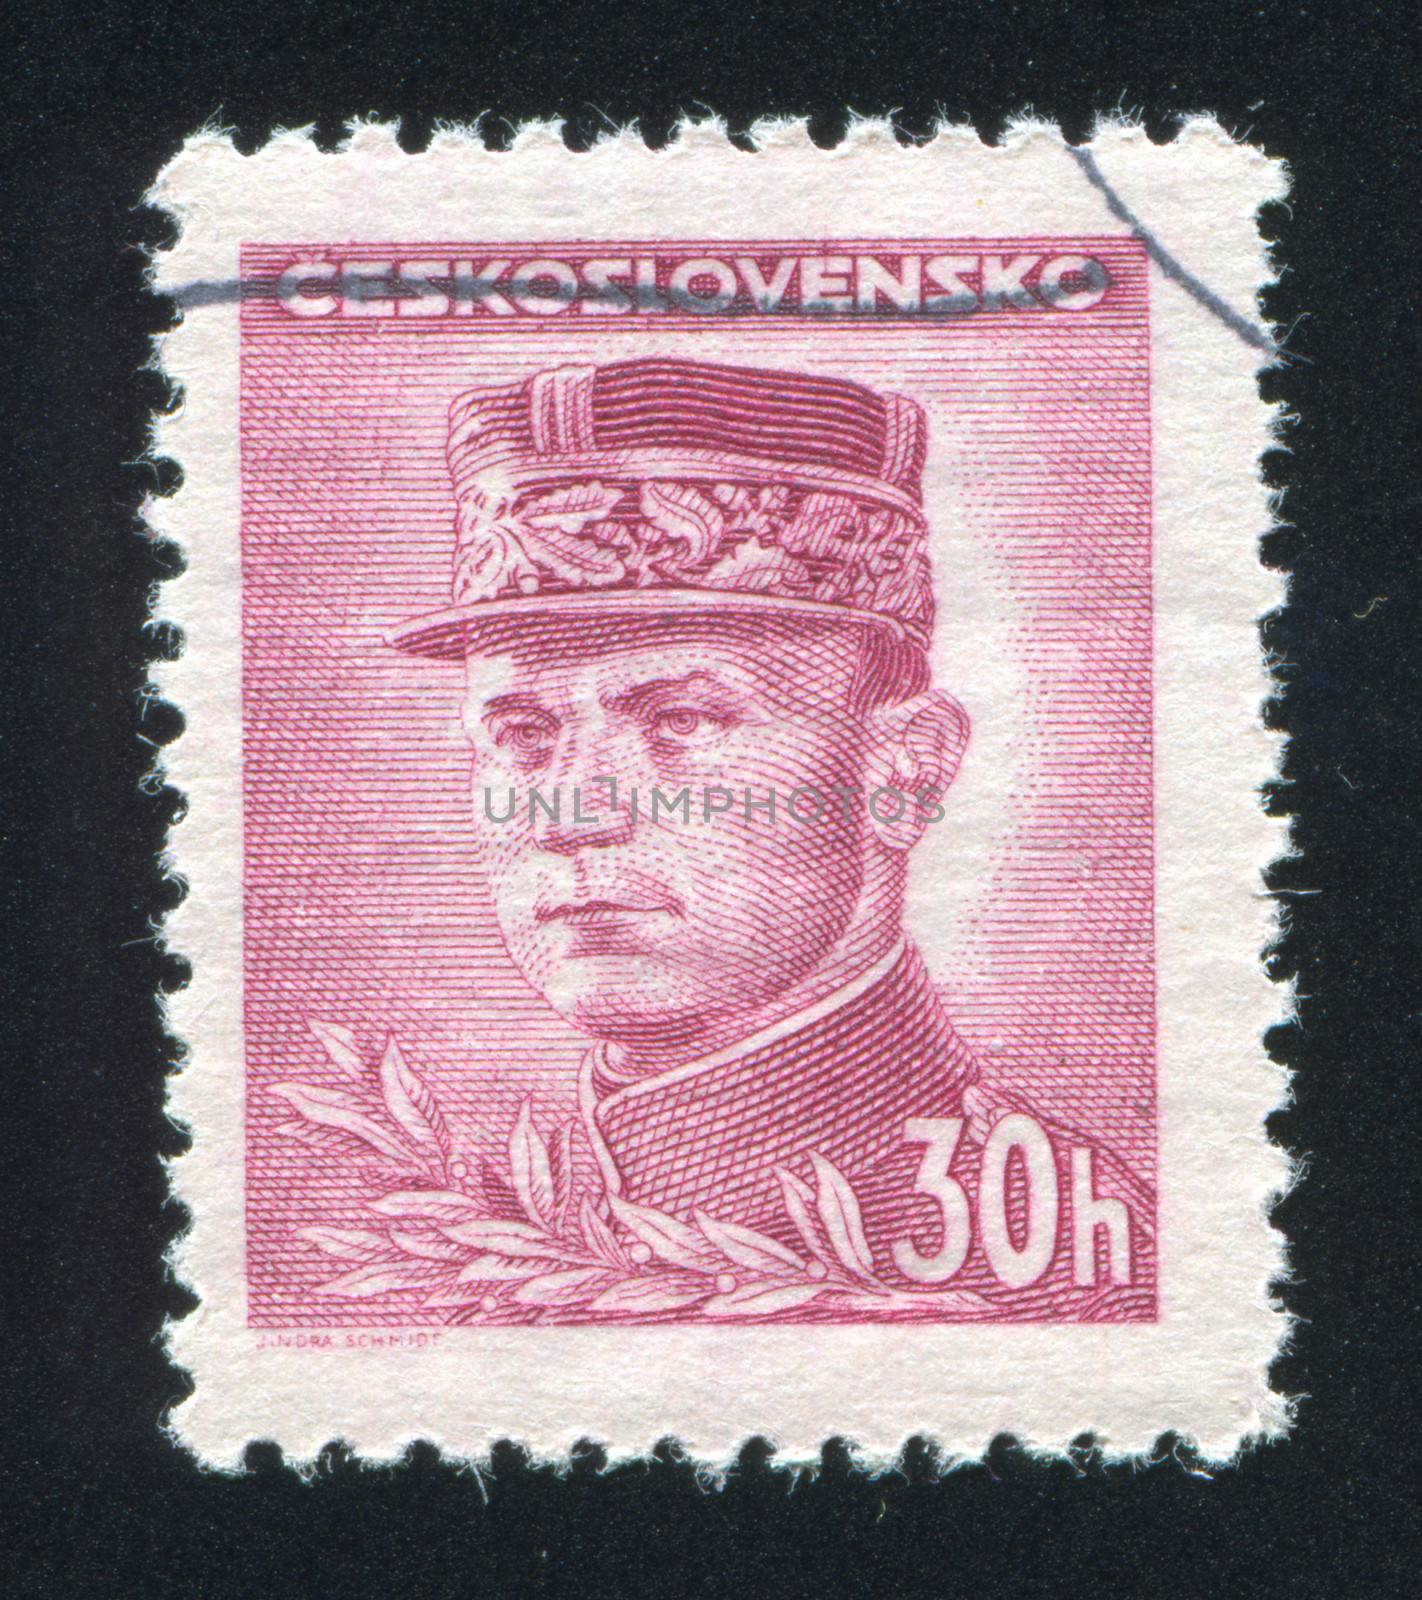 CZECHOSLOVAKIA - CIRCA 1945: stamp printed by Czechoslovakia, shows Stefanik, circa 1945